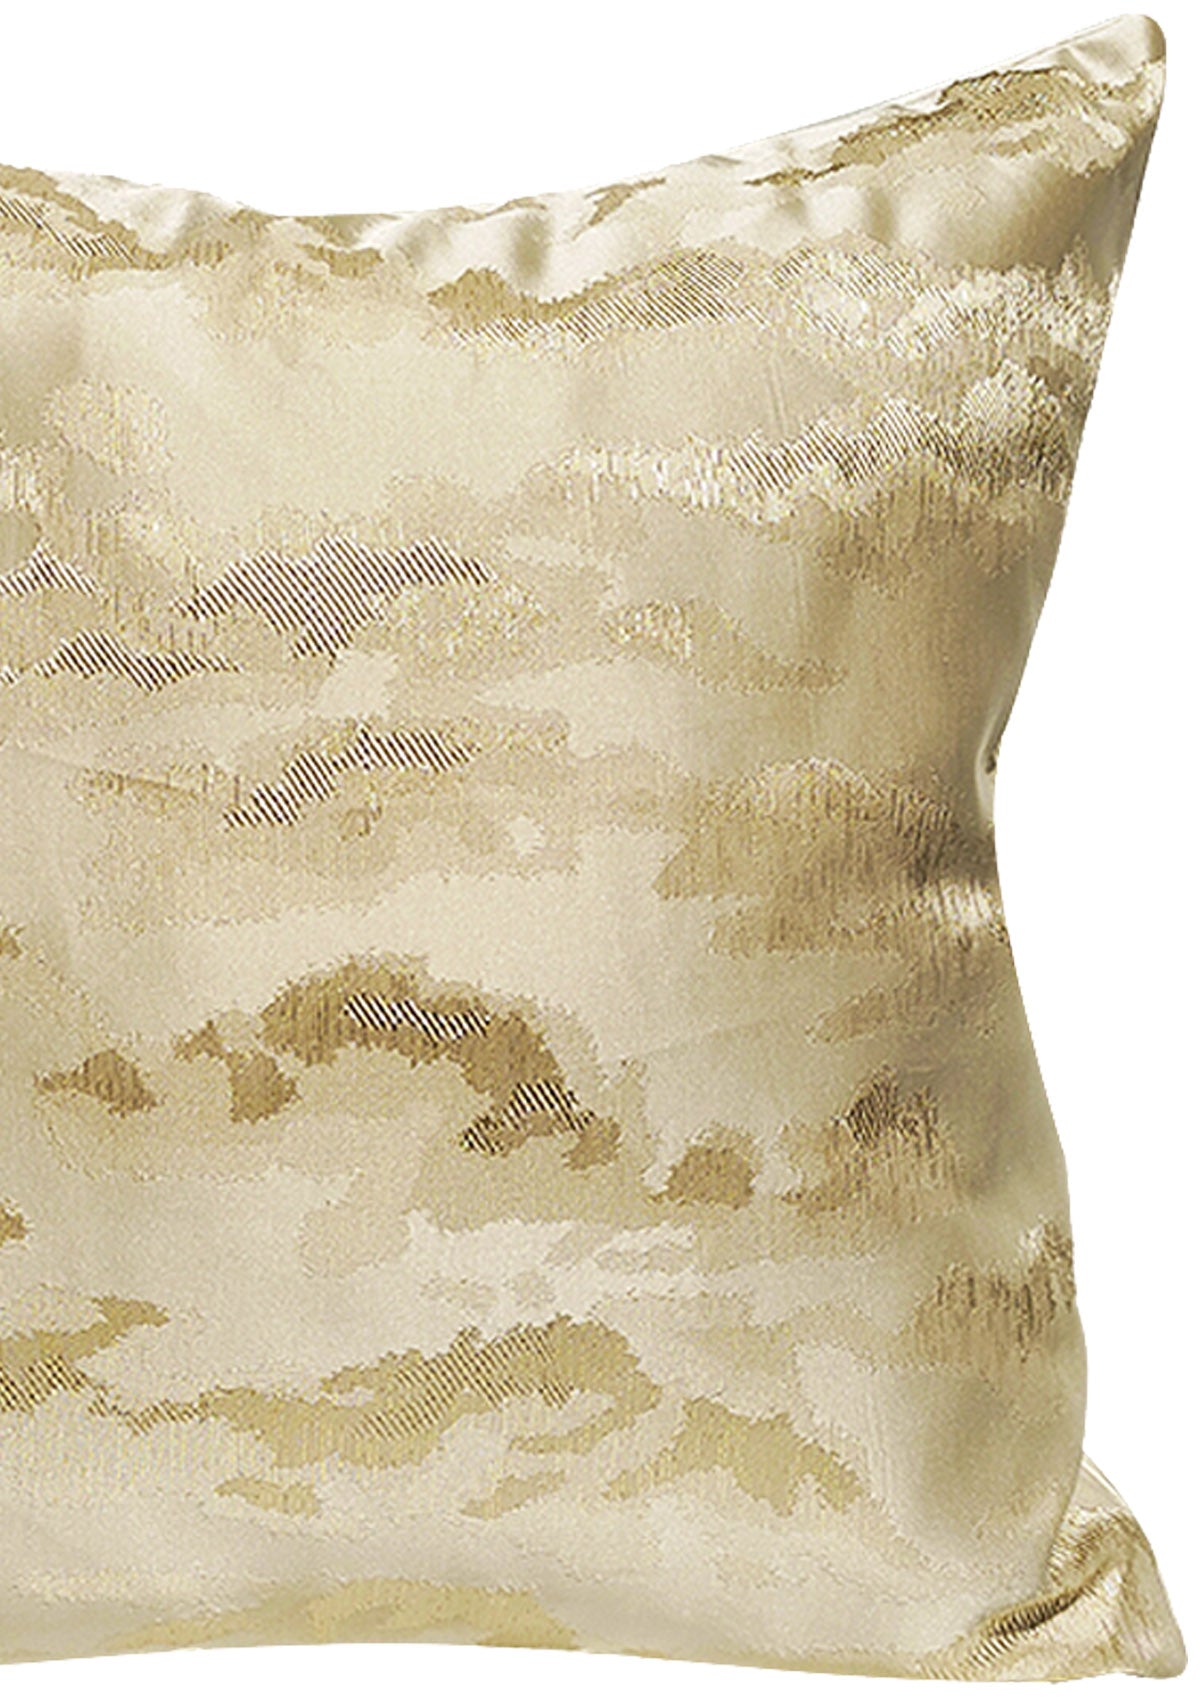 Opulent gold cushion cover uk with hidden zipper closure